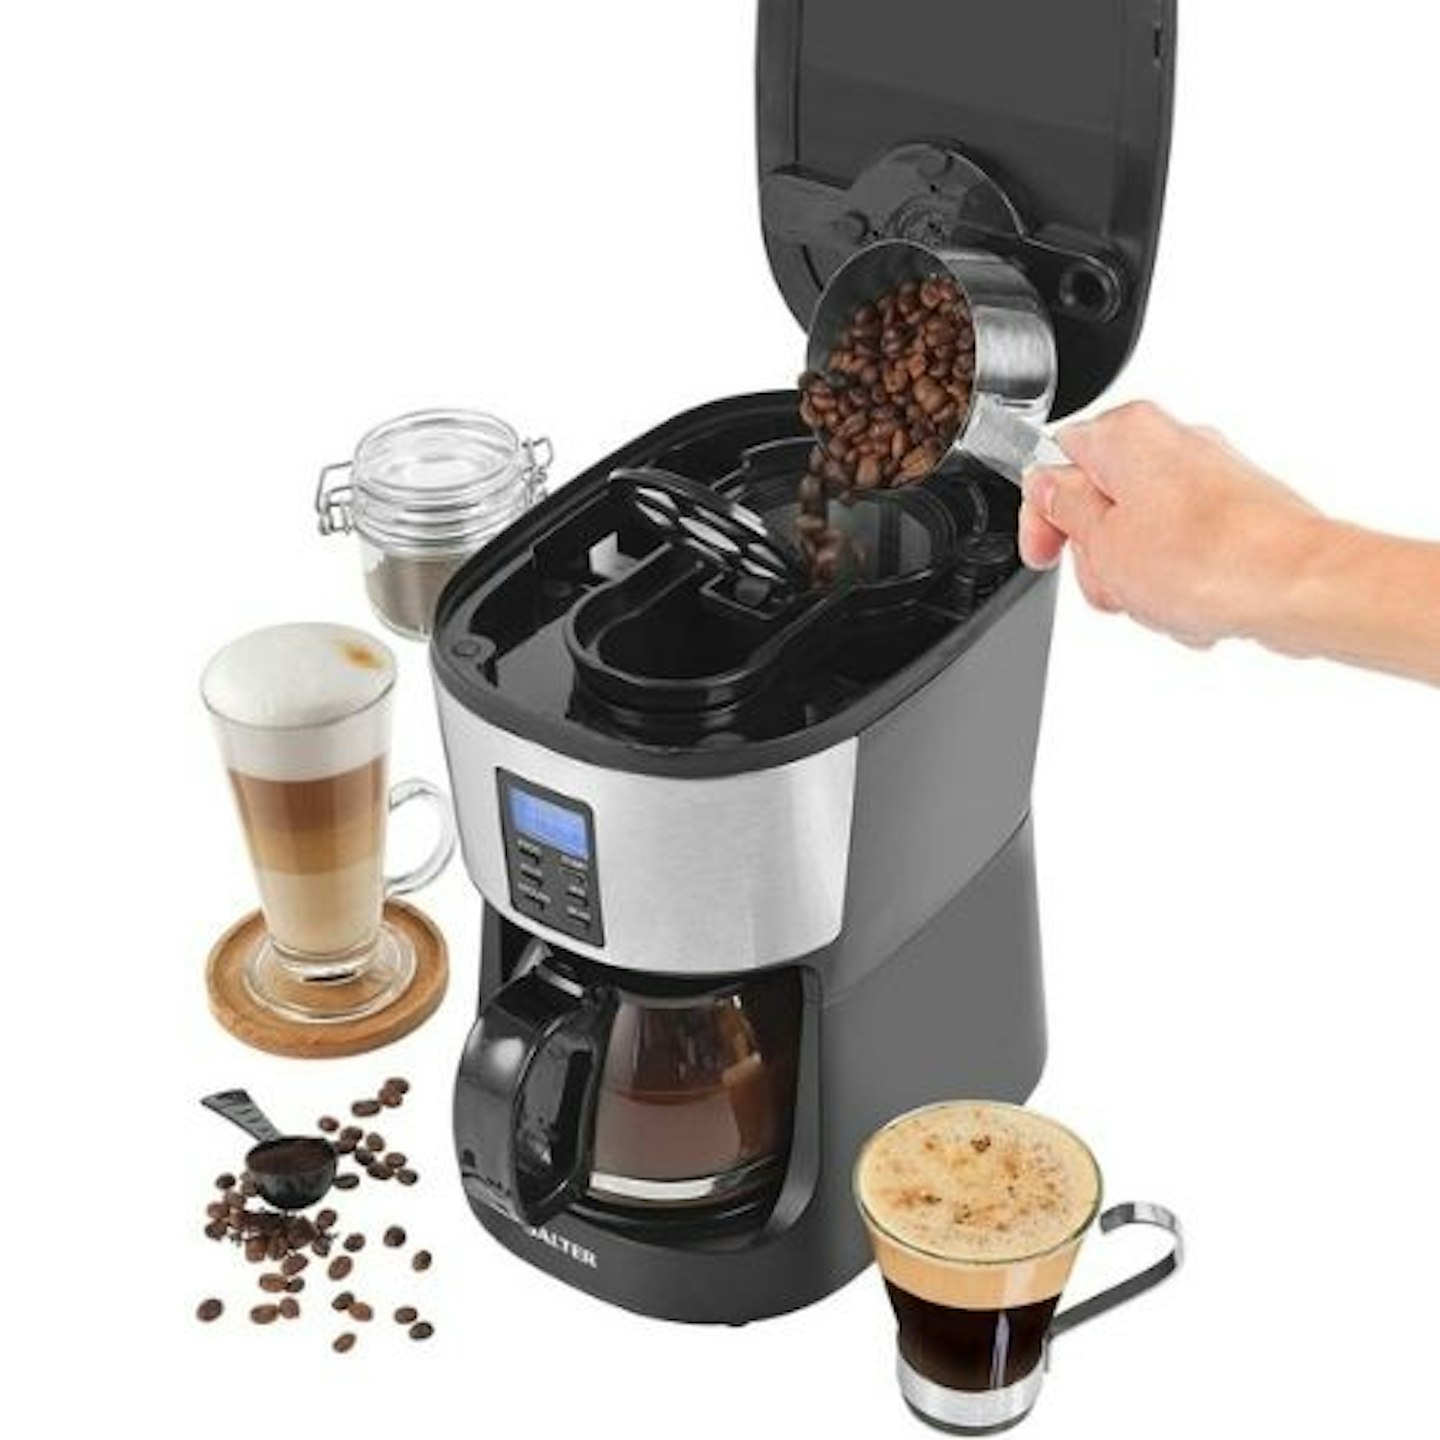 Best budget coffee machine for coffee shop quality drinks